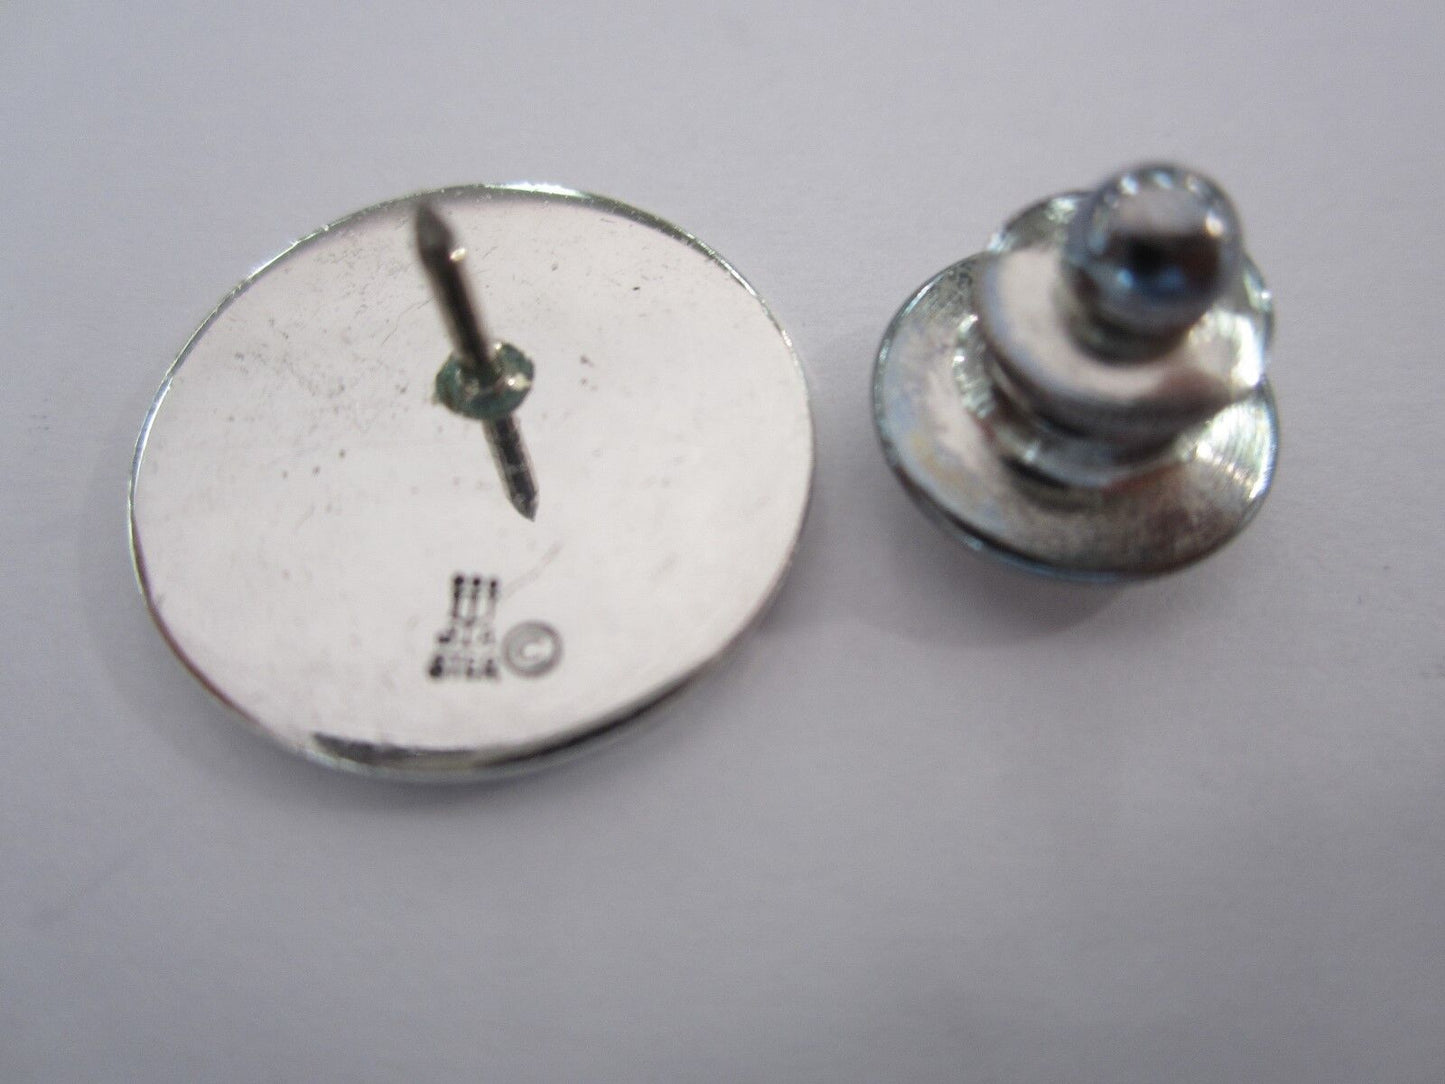 **RARE** Handmade James Avery Settlers Pin Kerrville Charm Sterling Silver .925